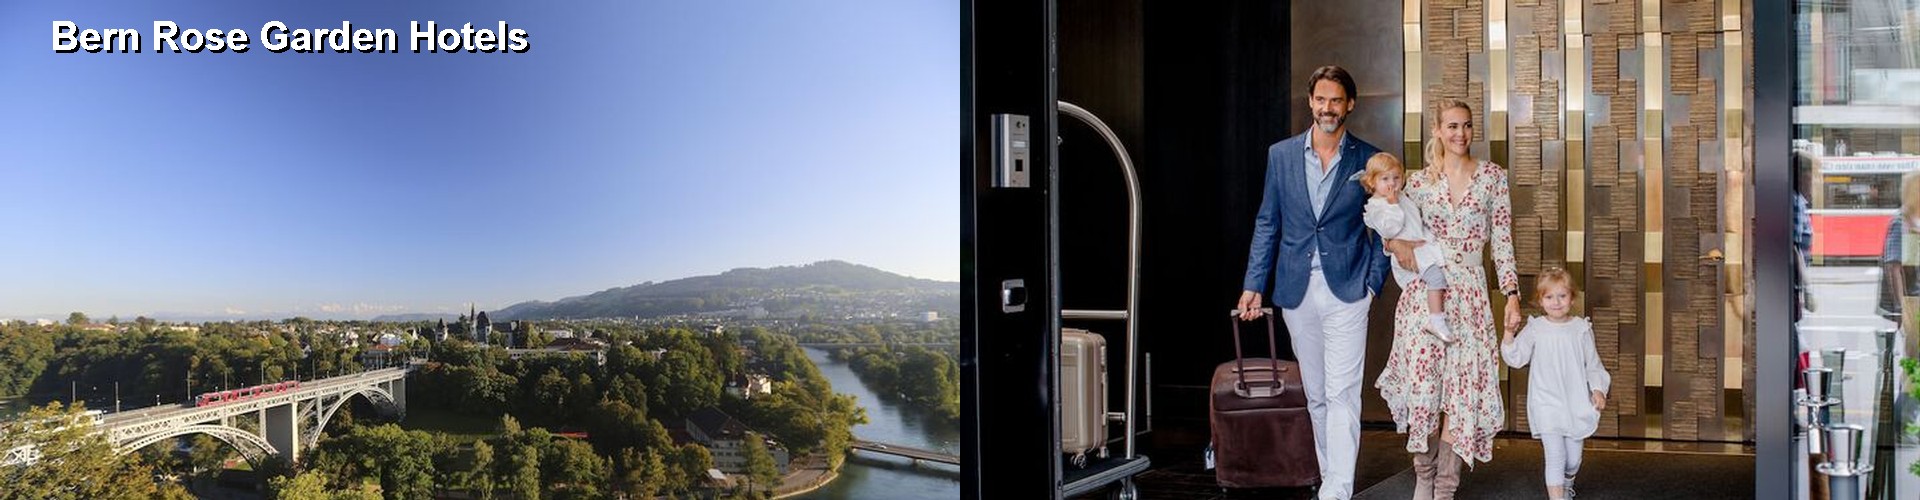 5 Best Hotels near Bern Rose Garden